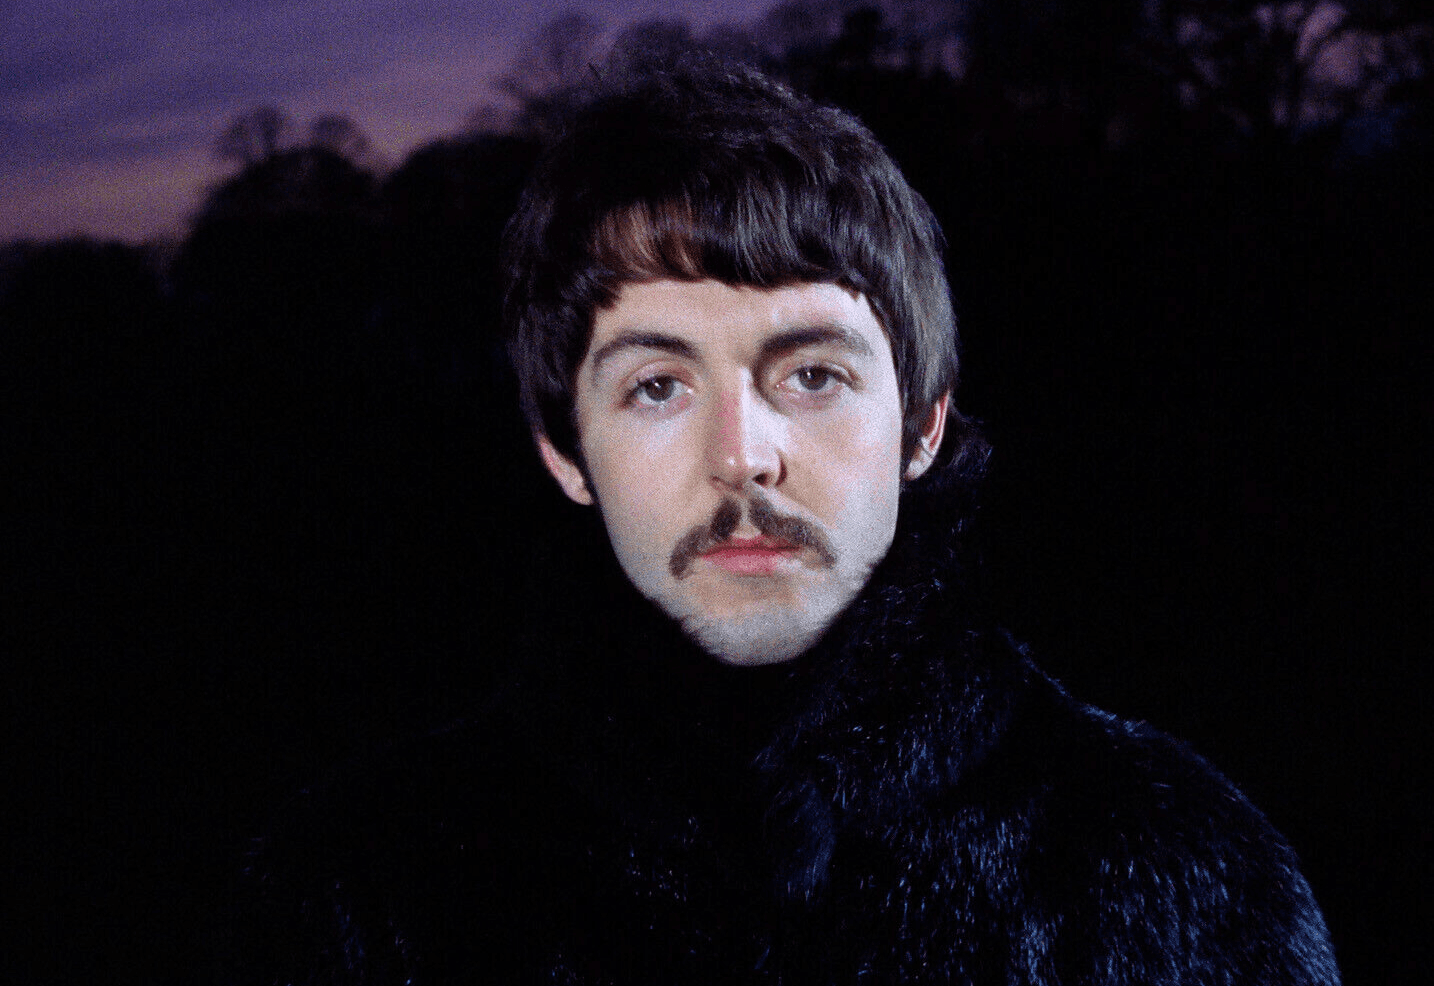 Paul McCartney (Sgt. Pepper Era)